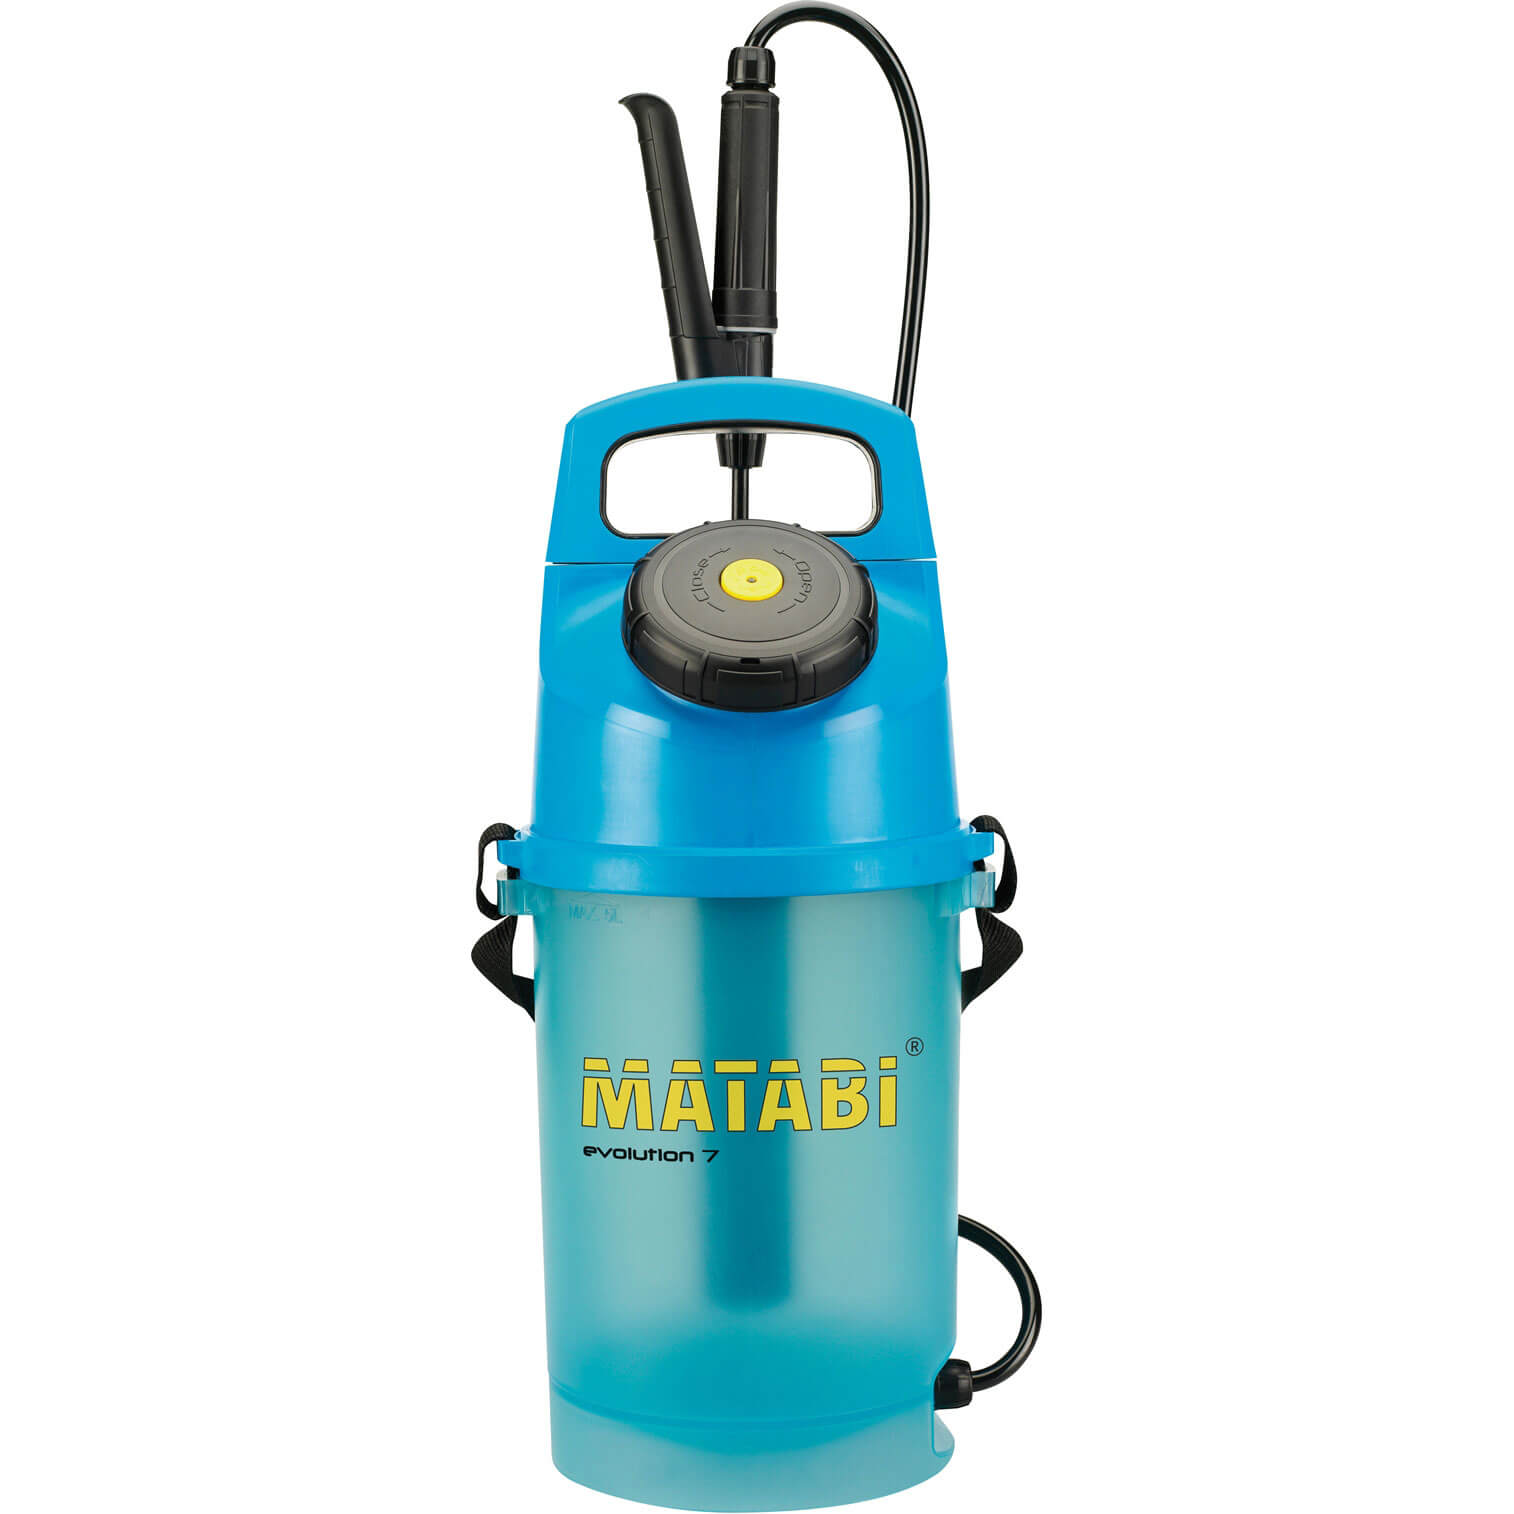 Photo of Matabi Evolution 7 Water Pressure Sprayer 7l